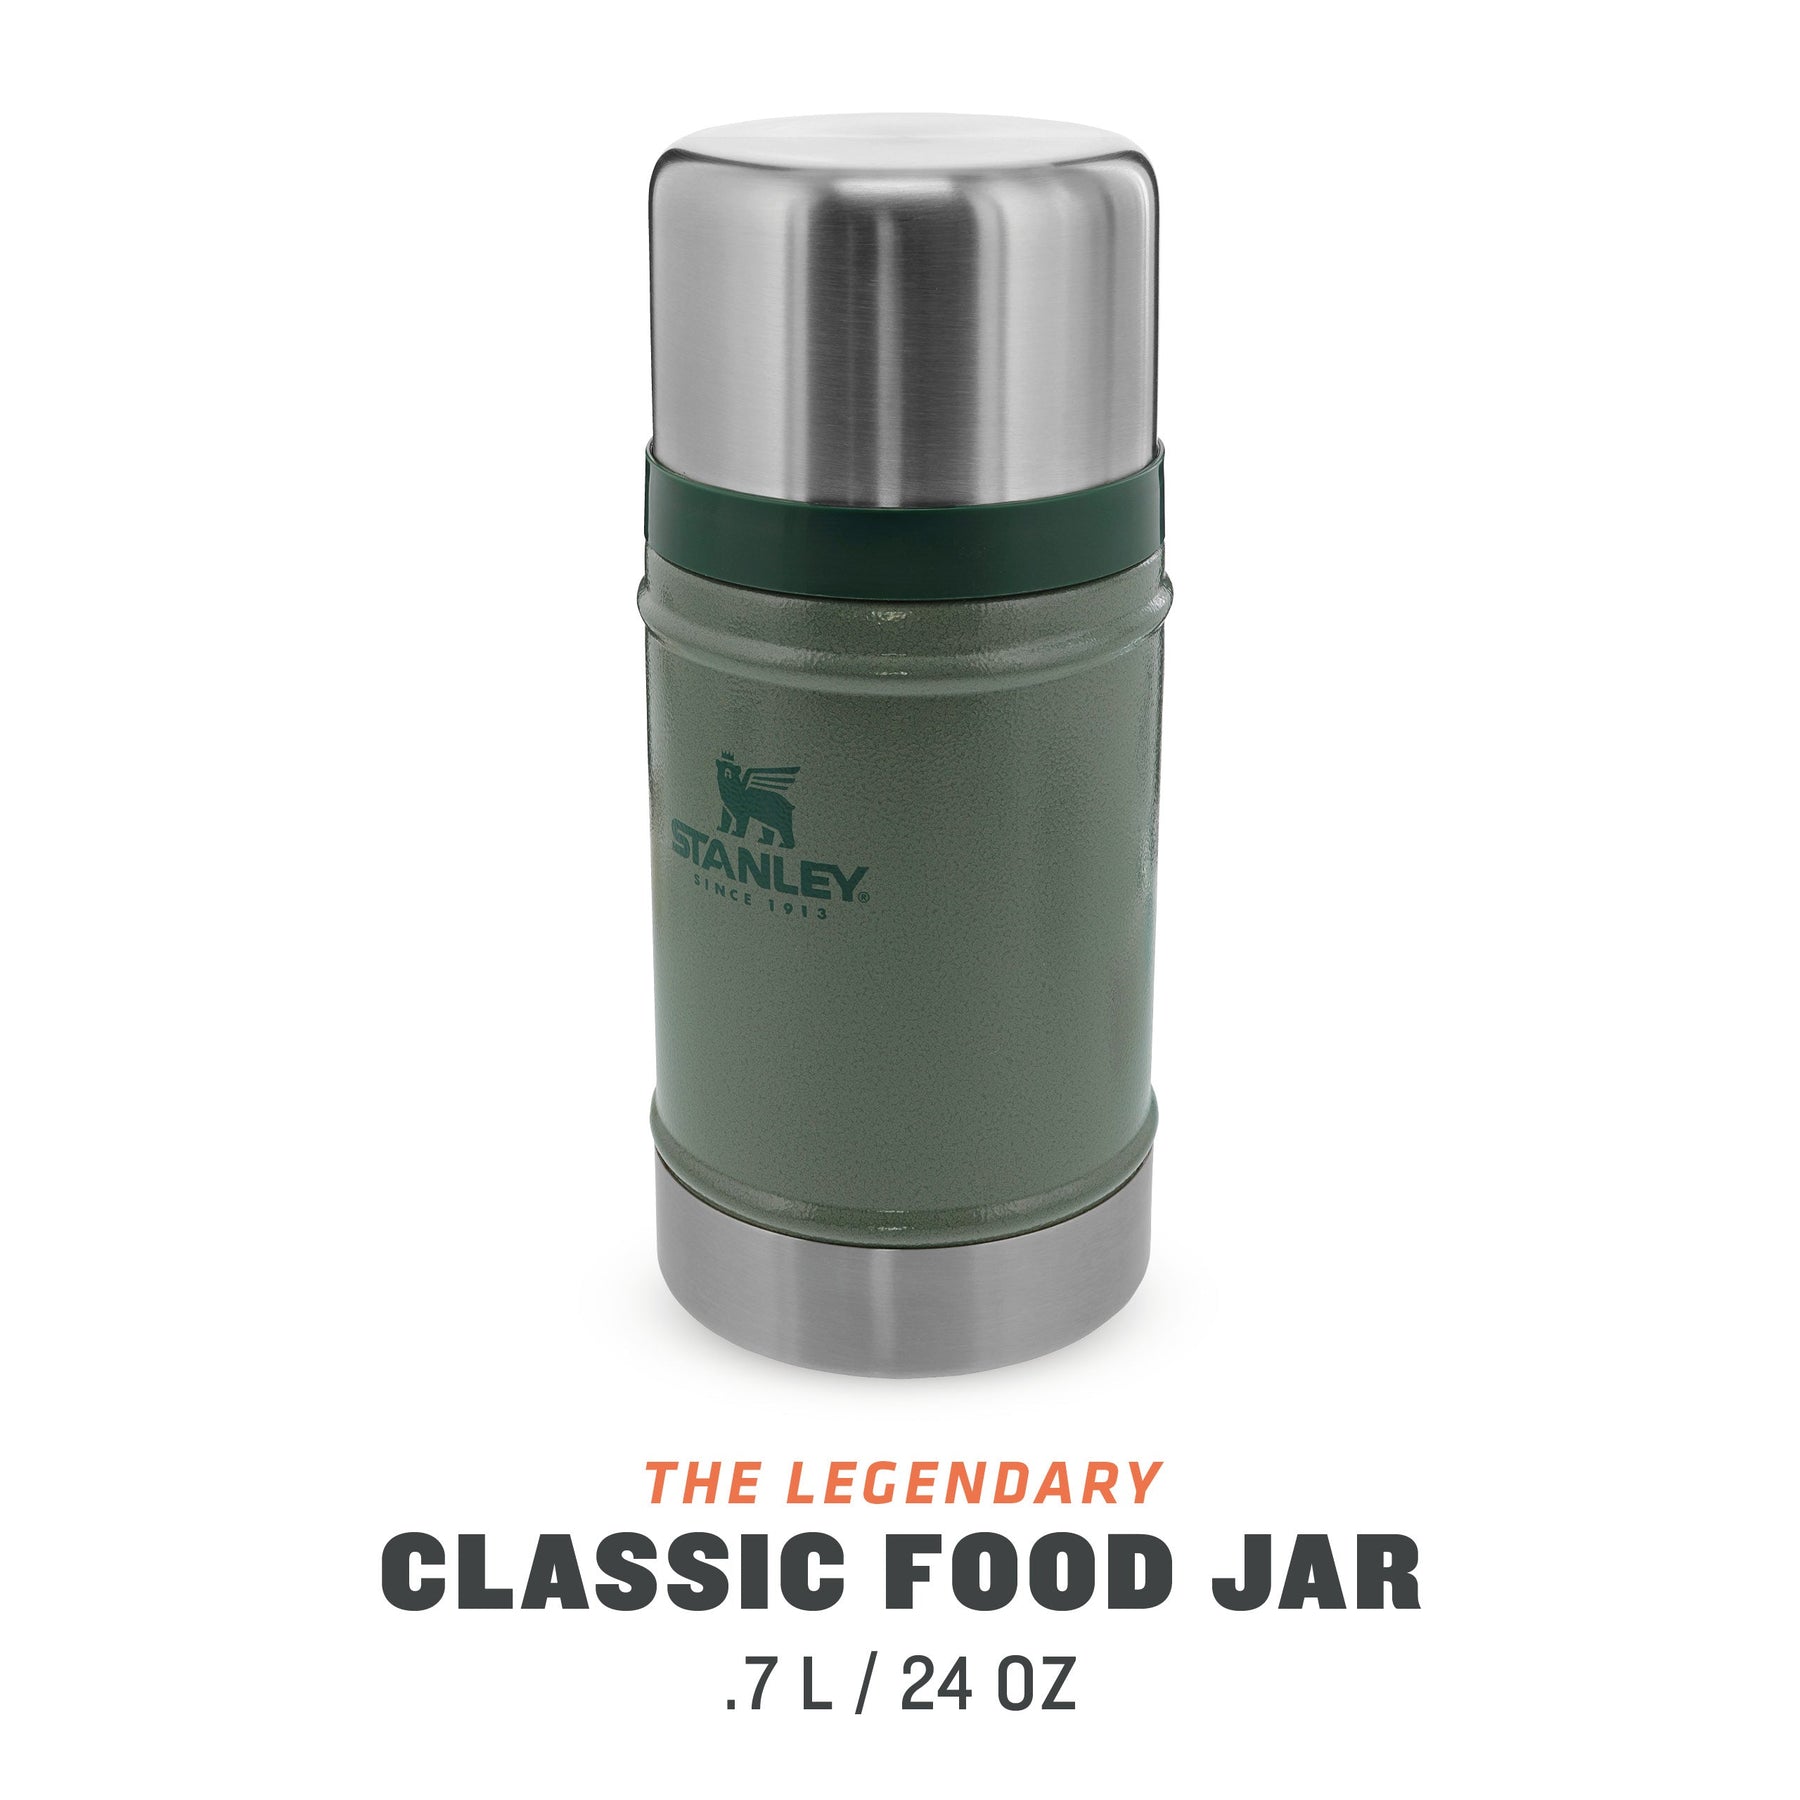 Stanley Legendary Classic Food Jar 24 oz